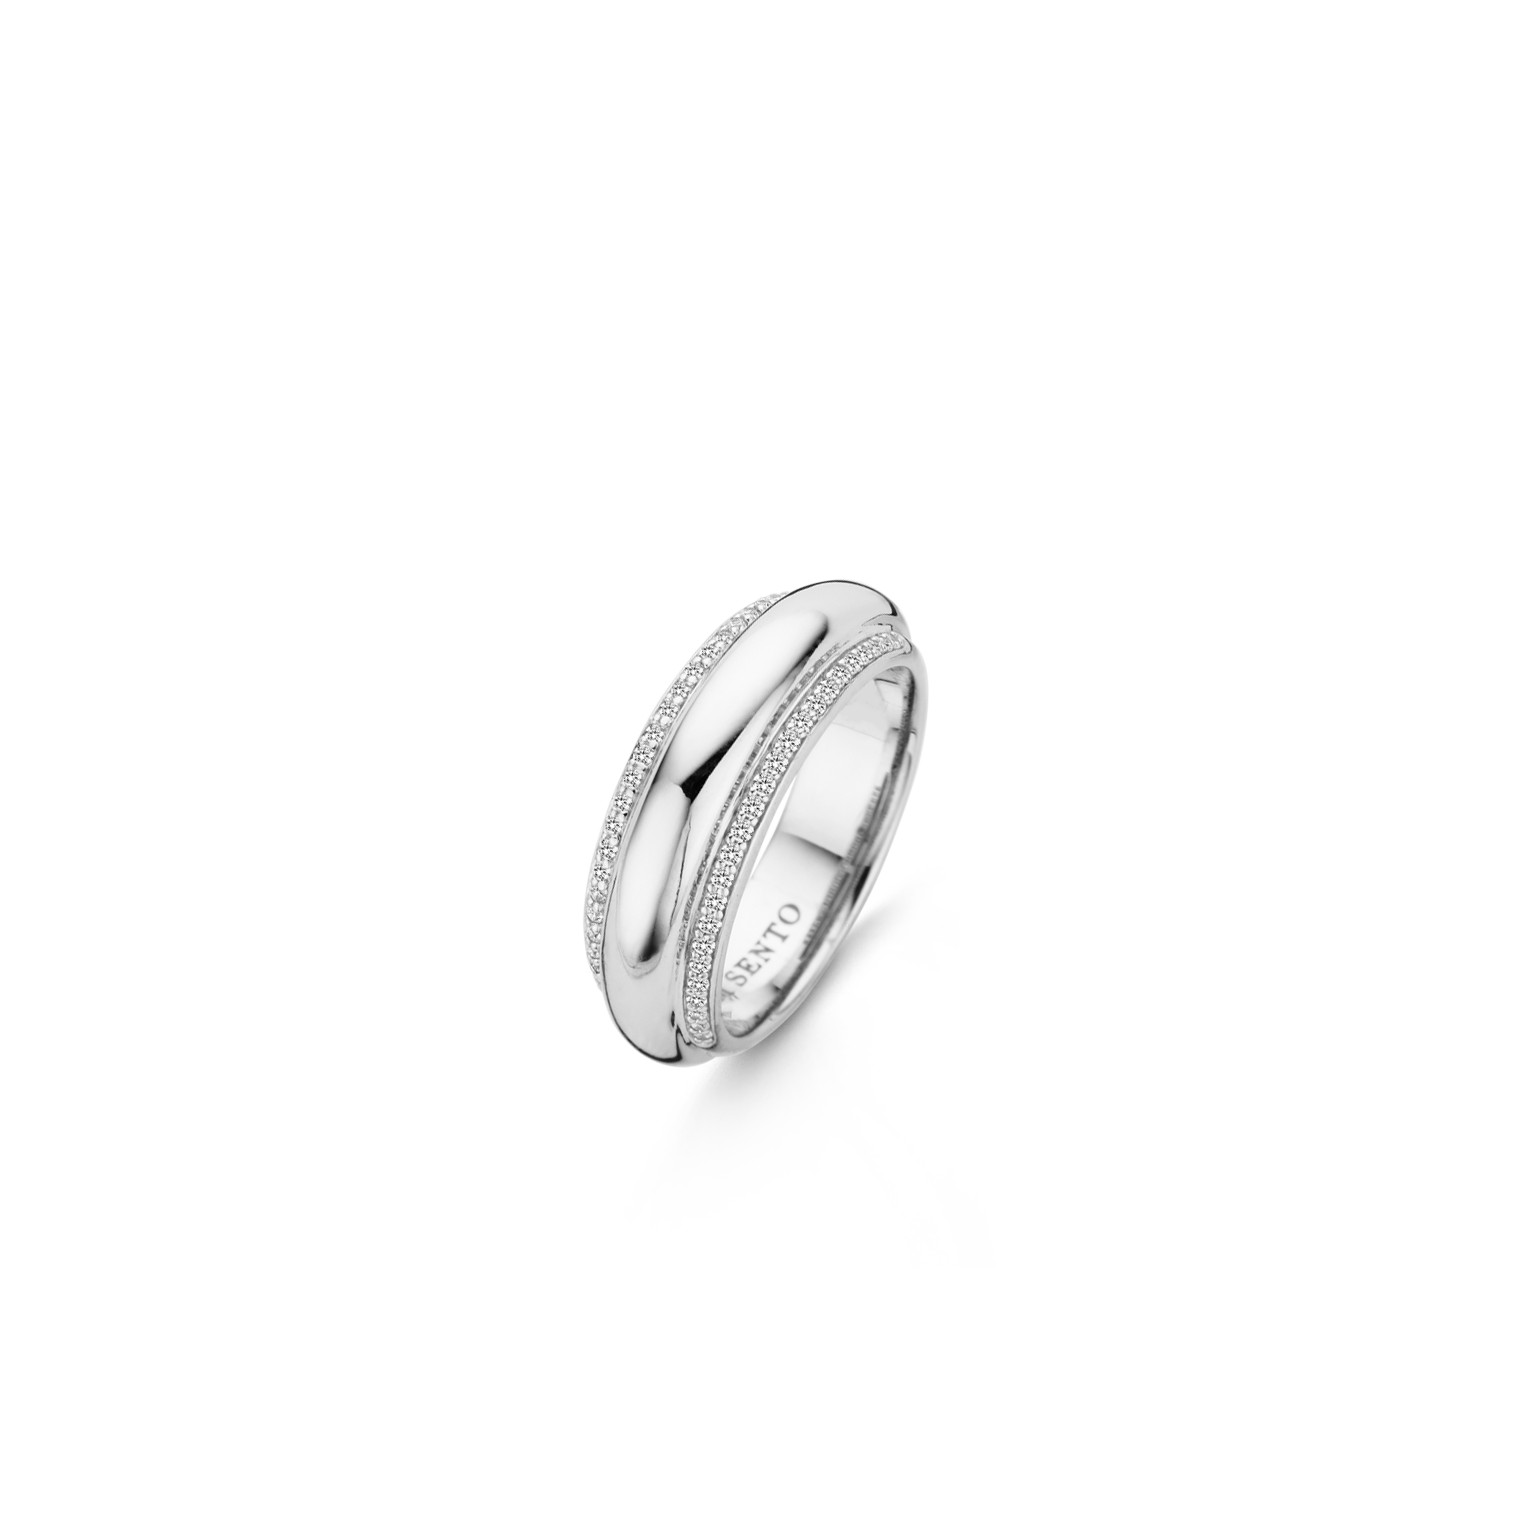 TI SENTO - Milano Ring 12143ZI Gala Jewelers Inc. White Oak, PA